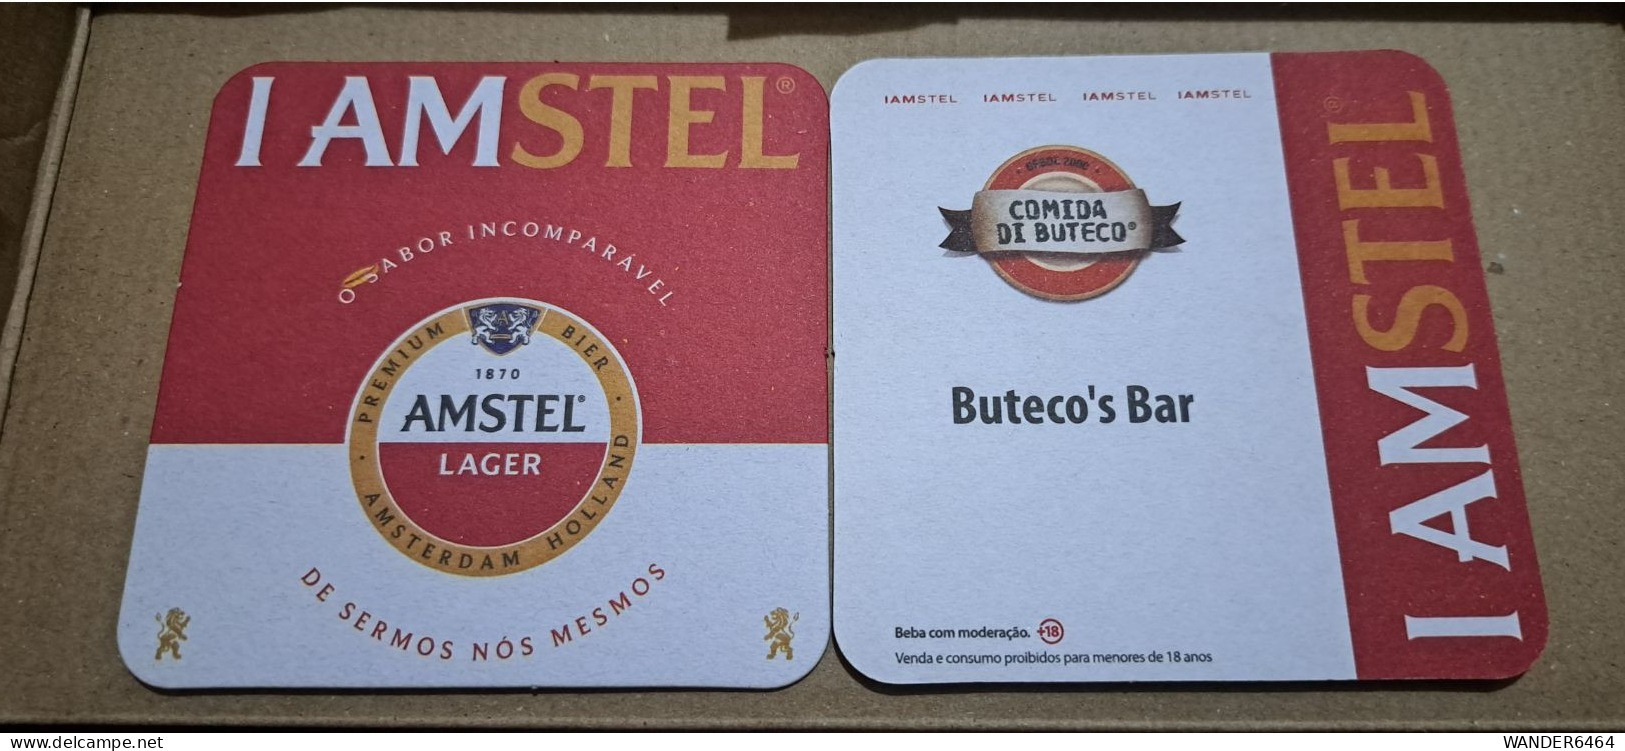 AMSTEL HISTORIC SET BRAZIL BREWERY  BEER  MATS - COASTERS #048  BUTECO'S BAR - Sous-bocks